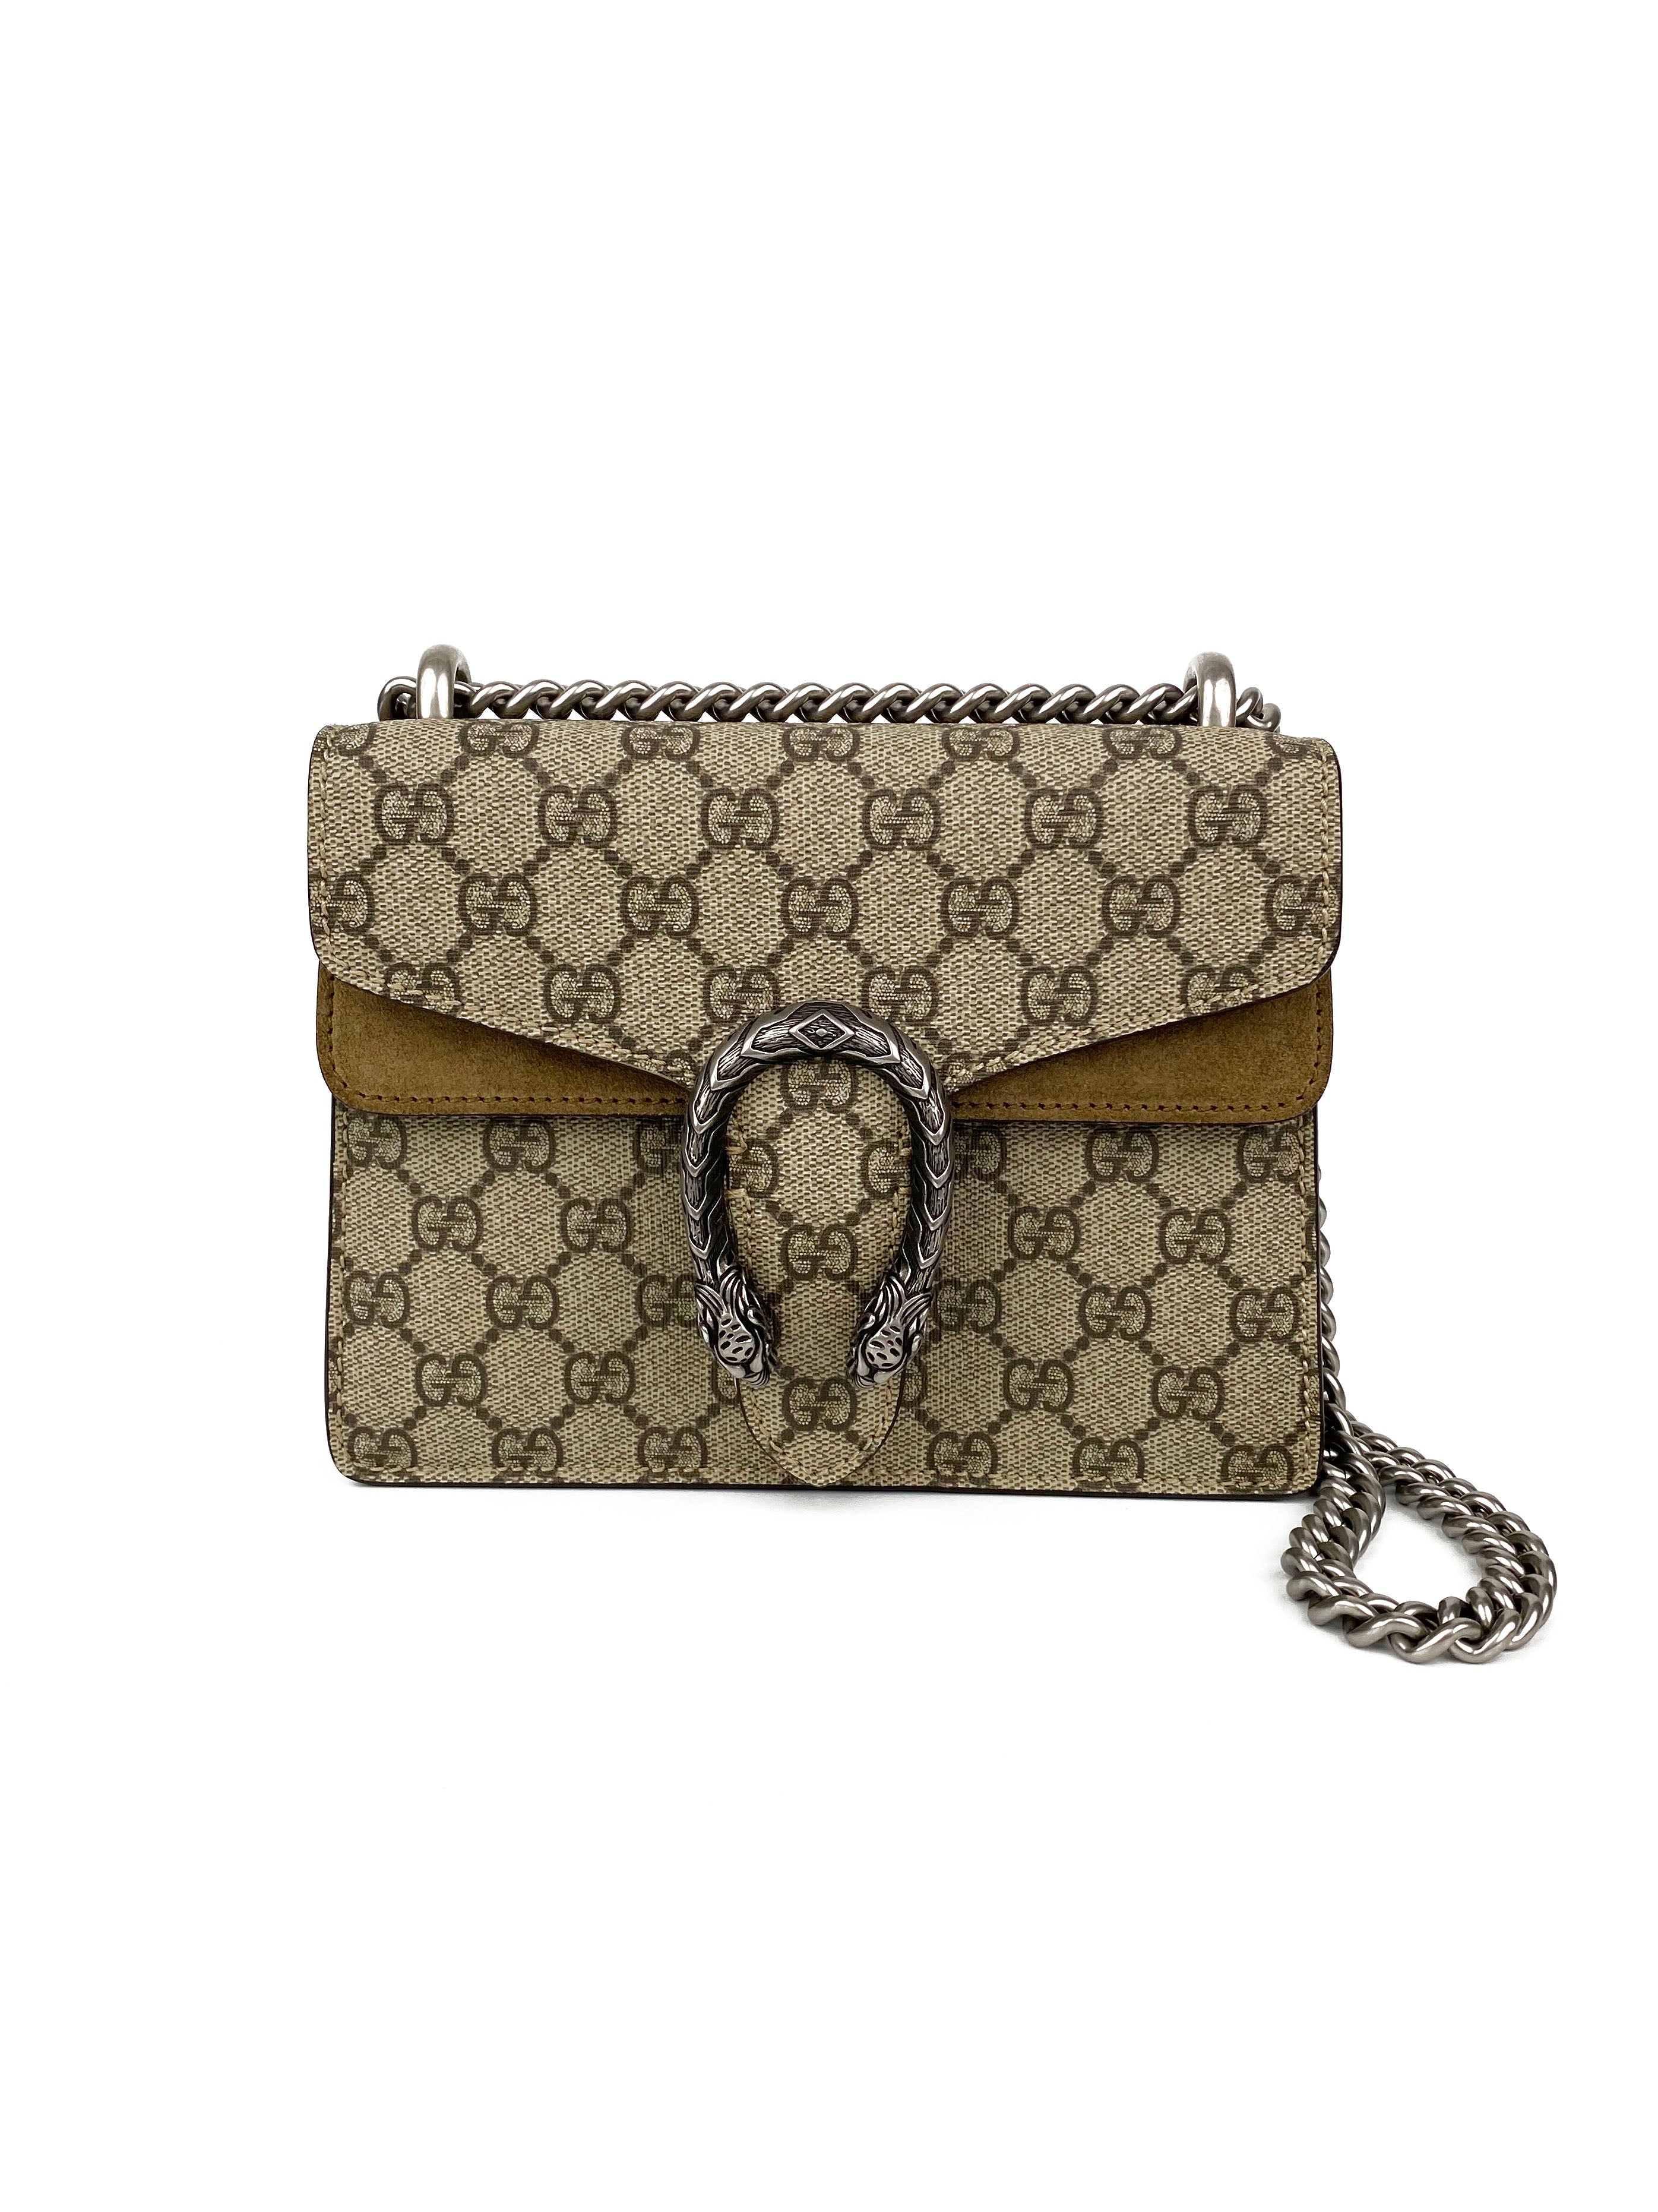 Gucci GG Supreme Mini Dionysus Bag with Taupe Trim